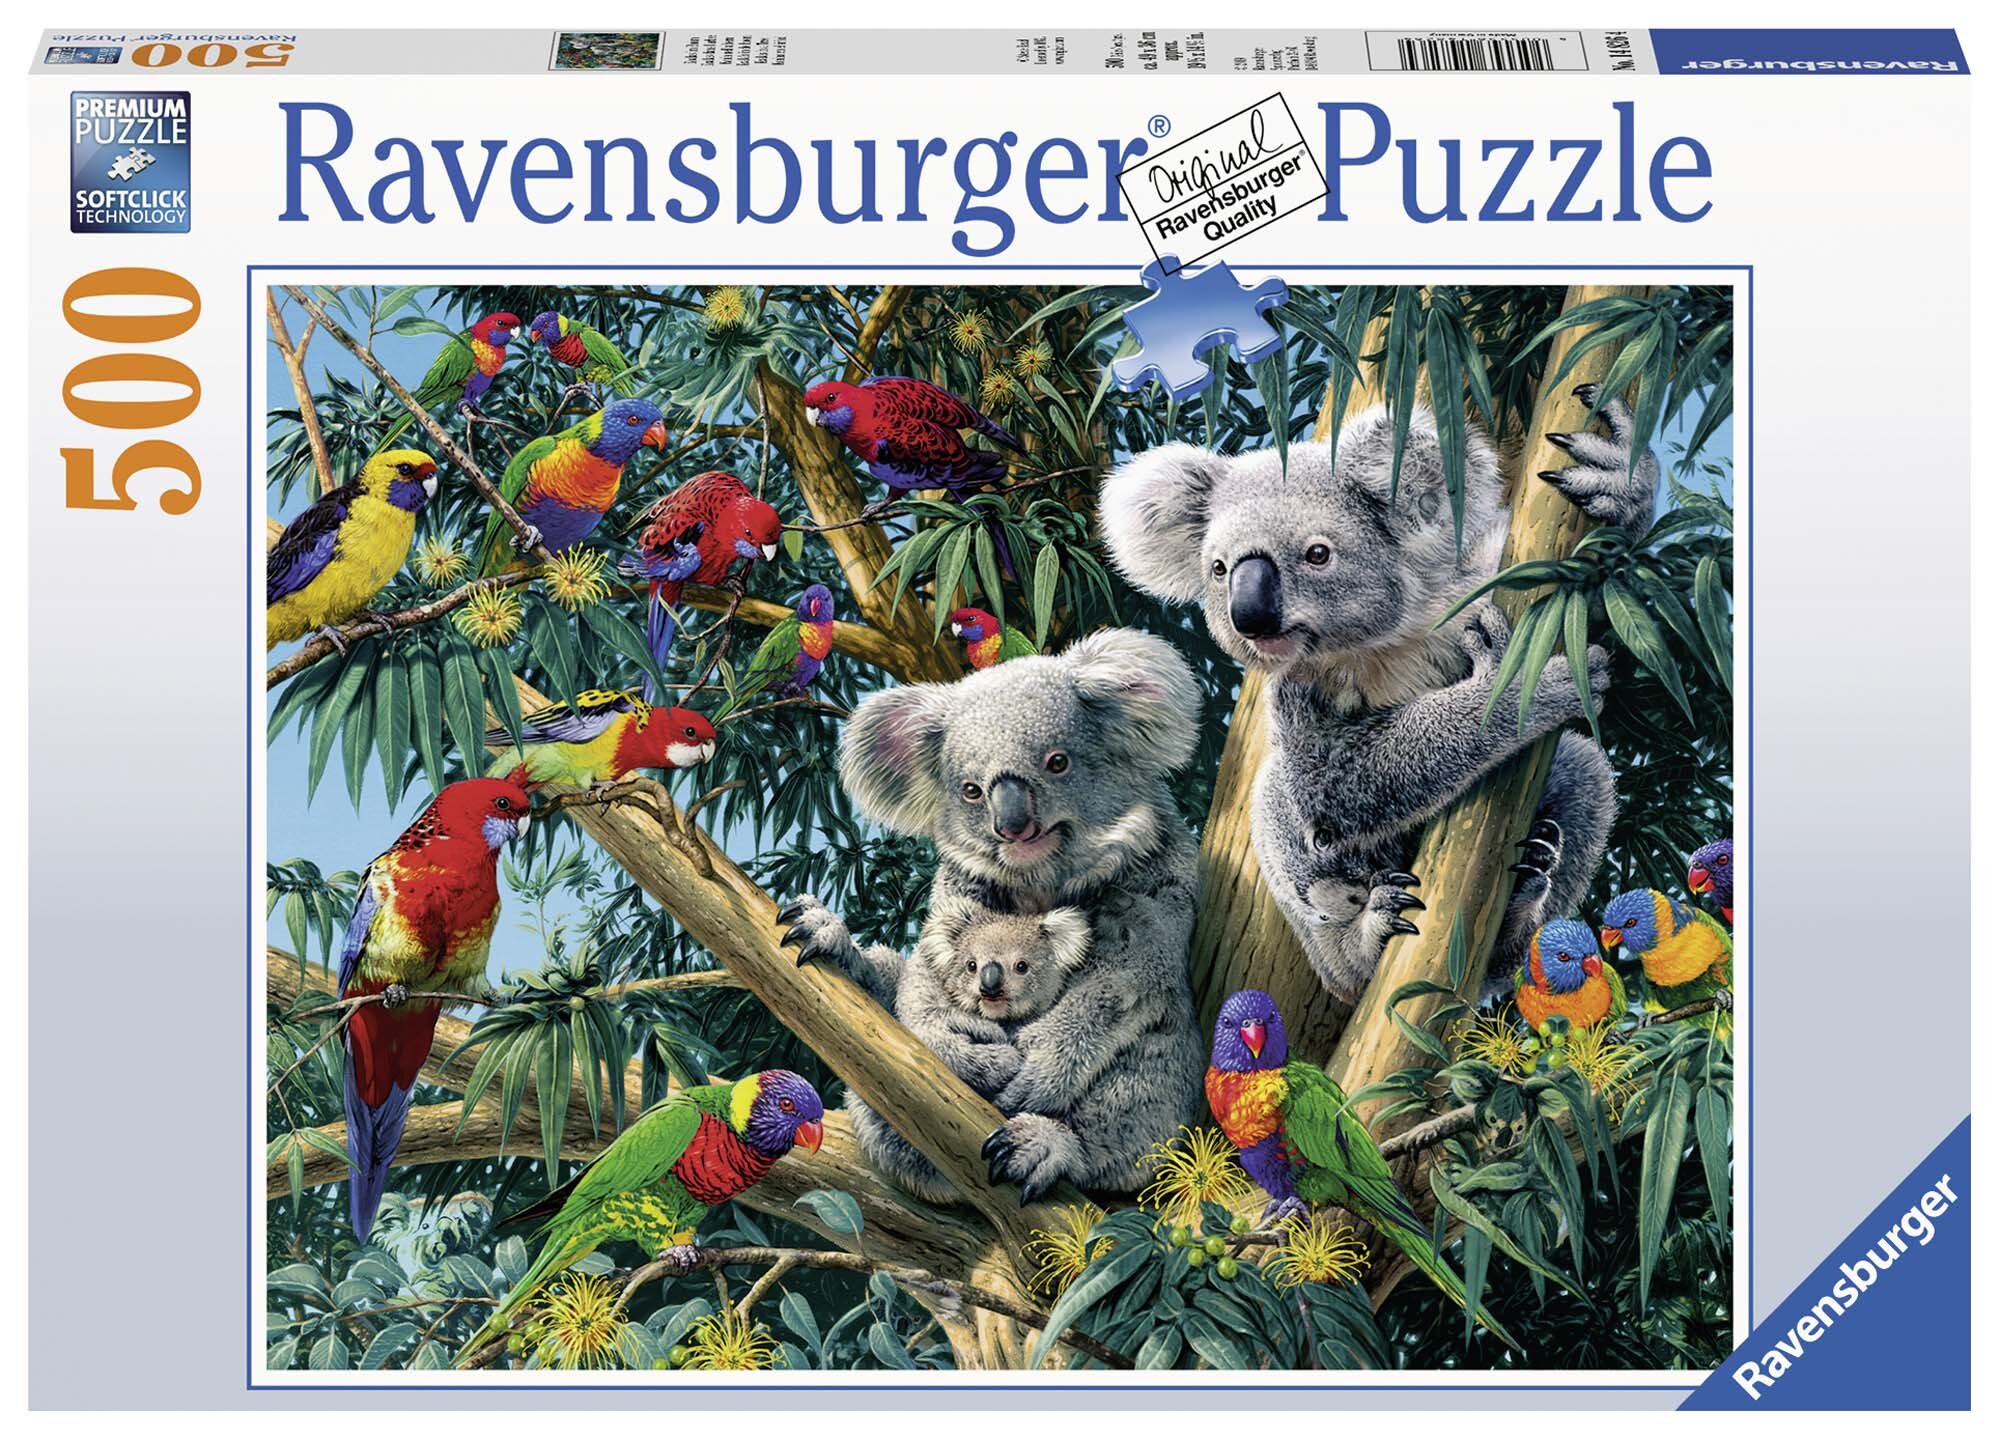 Ravensburger Pussel - Koalor i träd 500 bitar